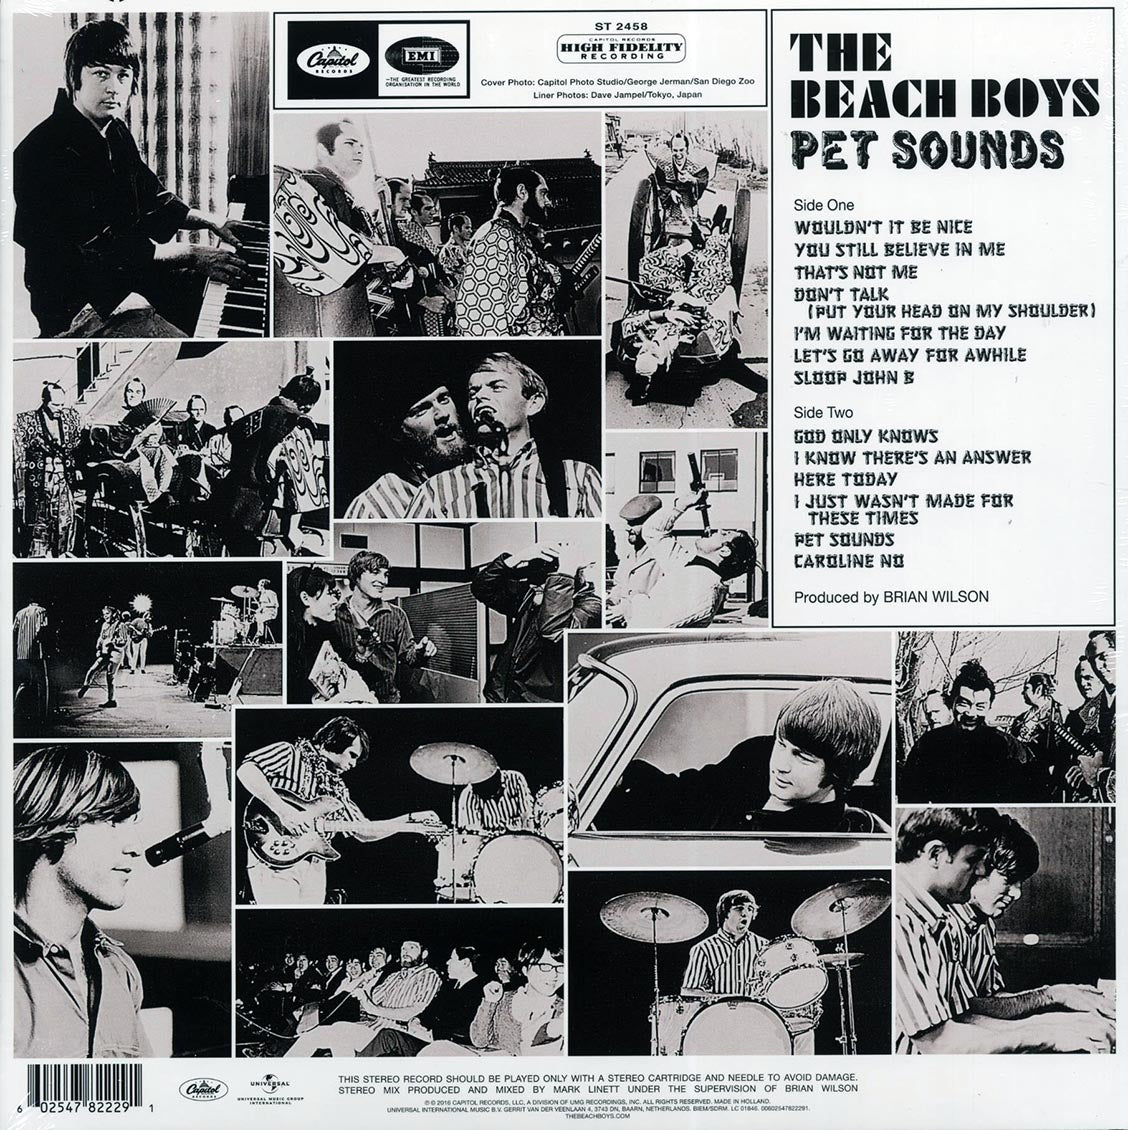 The Beach Boys - Pet Sounds (50th Anniv. Ed.) (stereo) (incl. mp3) (180g) - Vinyl LP, LP